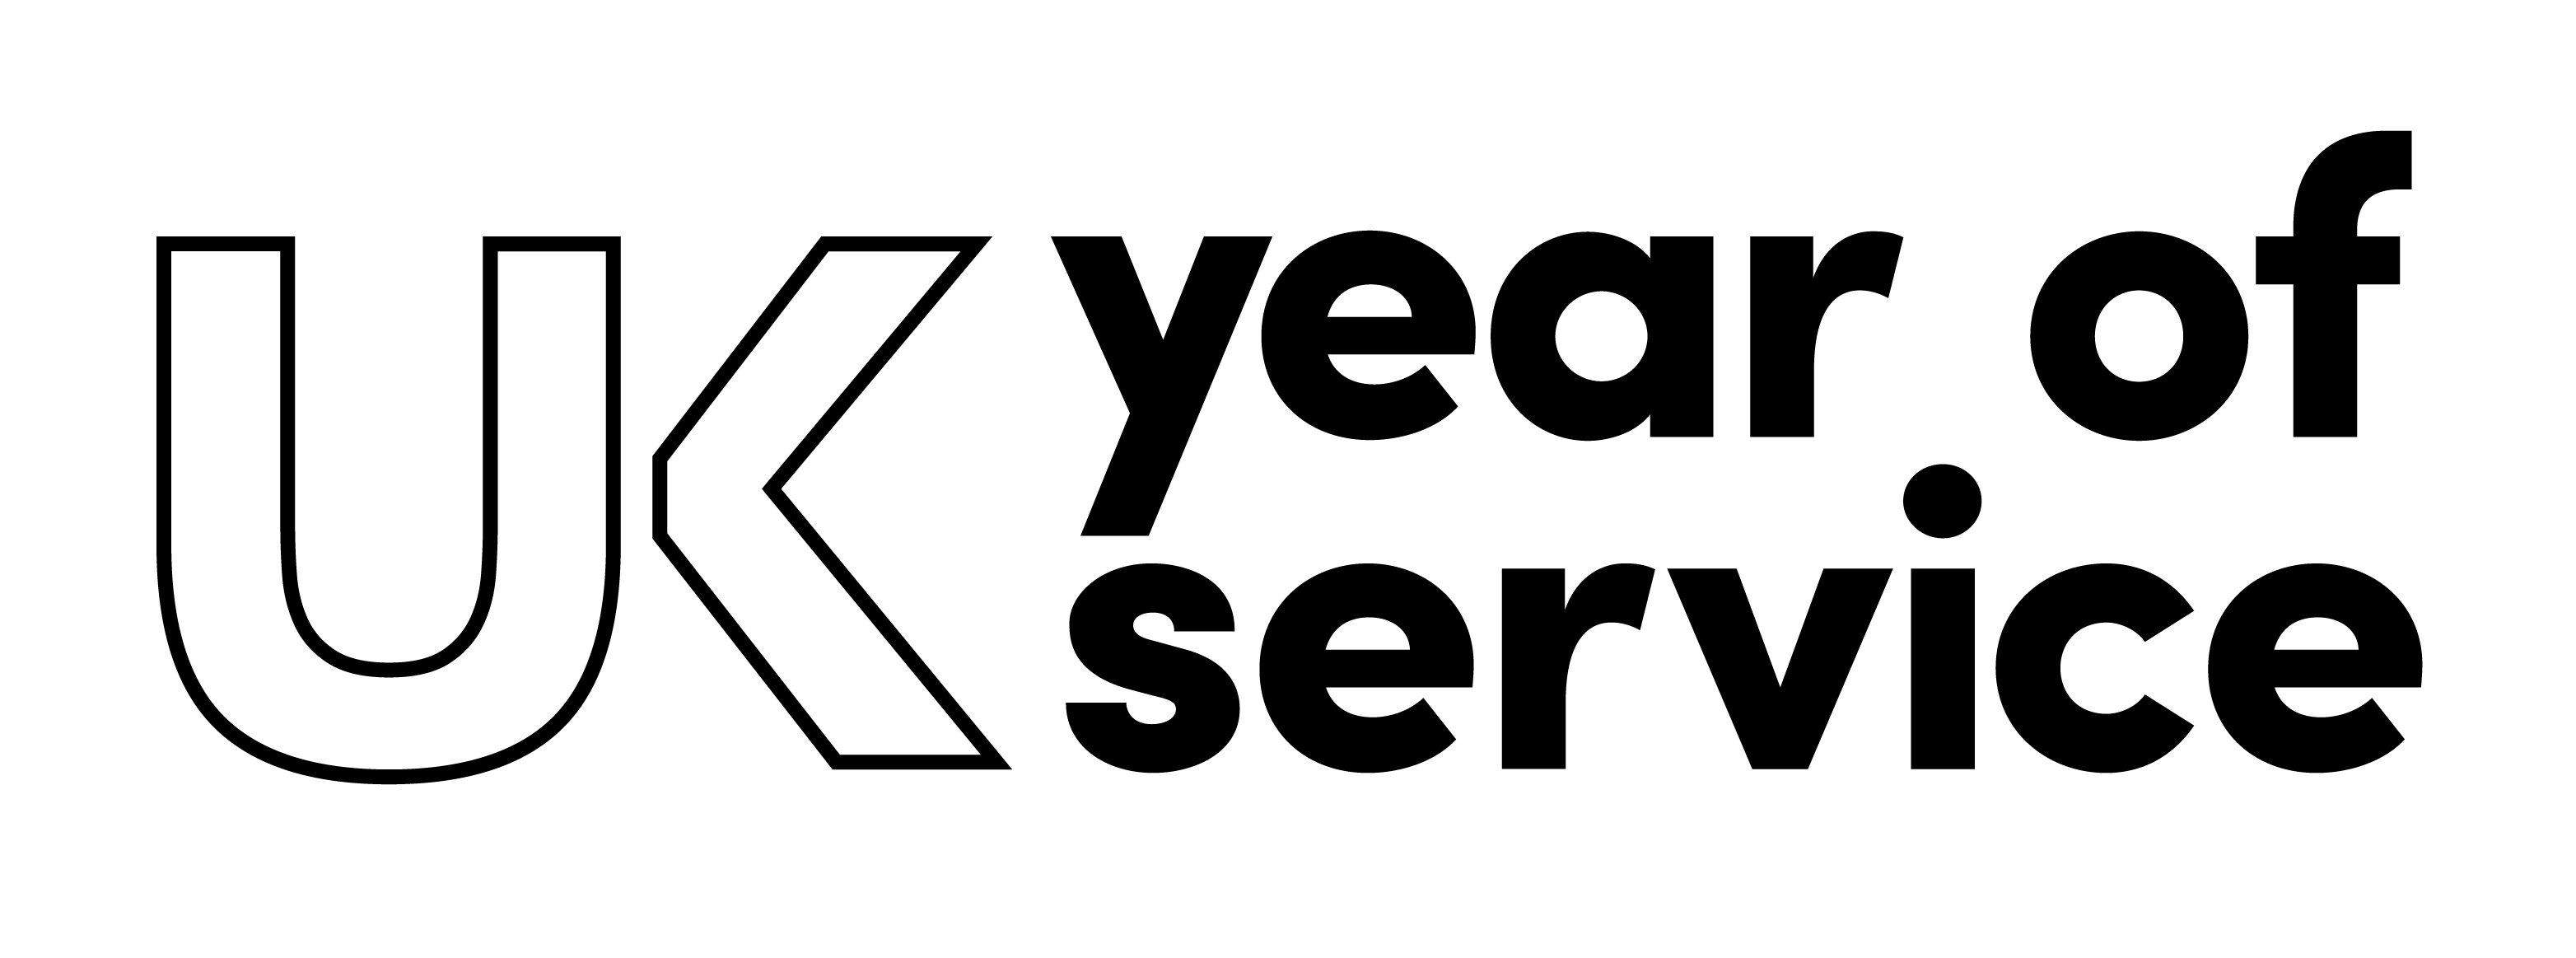 uk year of service logo black